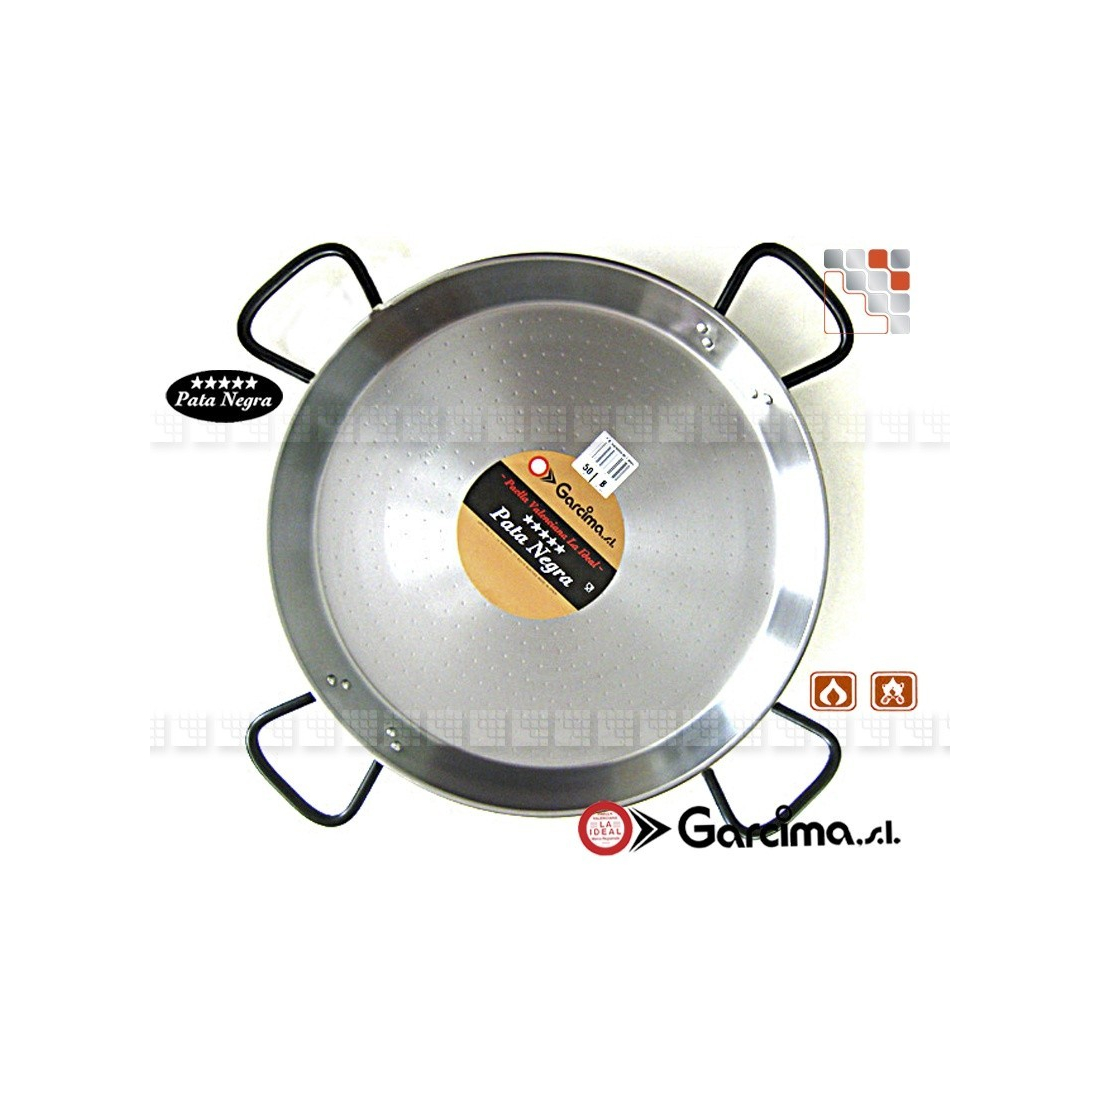 Paella dish D80 Polished PataNegra Garcima G05-85080 GARCIMA® LaIdeal Paella dish Polished PataNegra Garcima